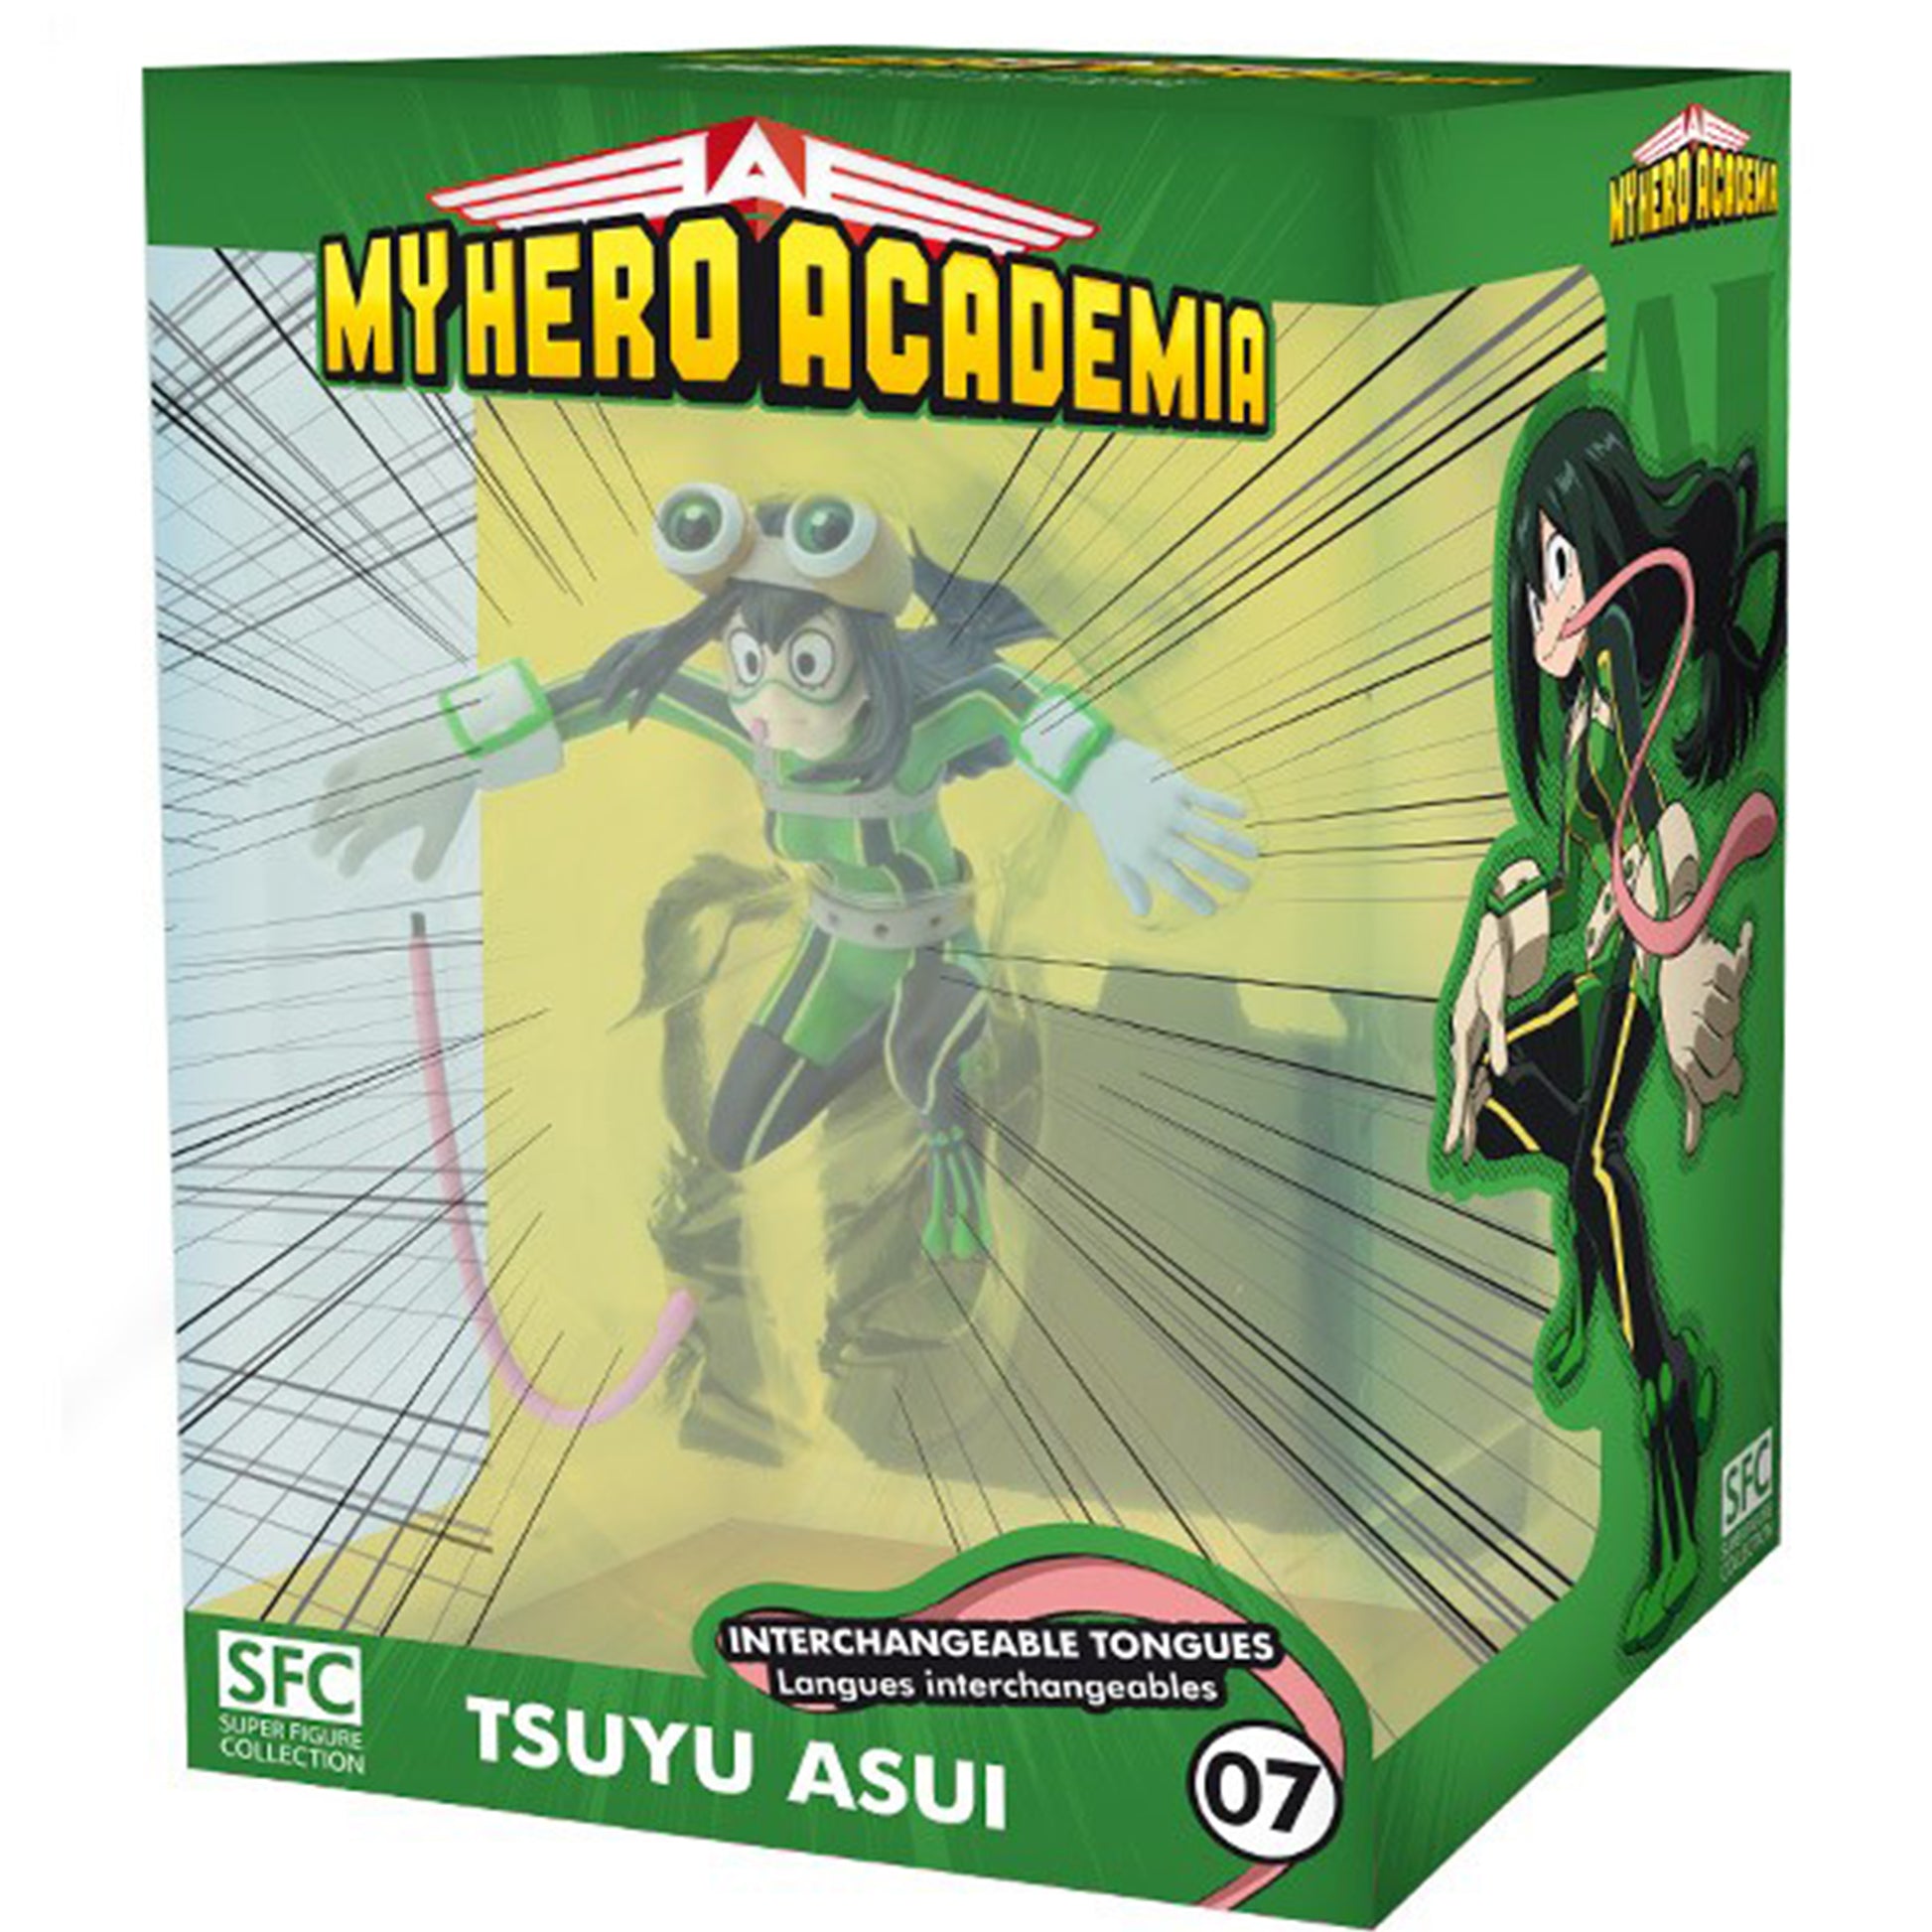 My Hero Academia - Tsuyu Asui 1:10 Scale Action Figure in Box | Happy Piranha